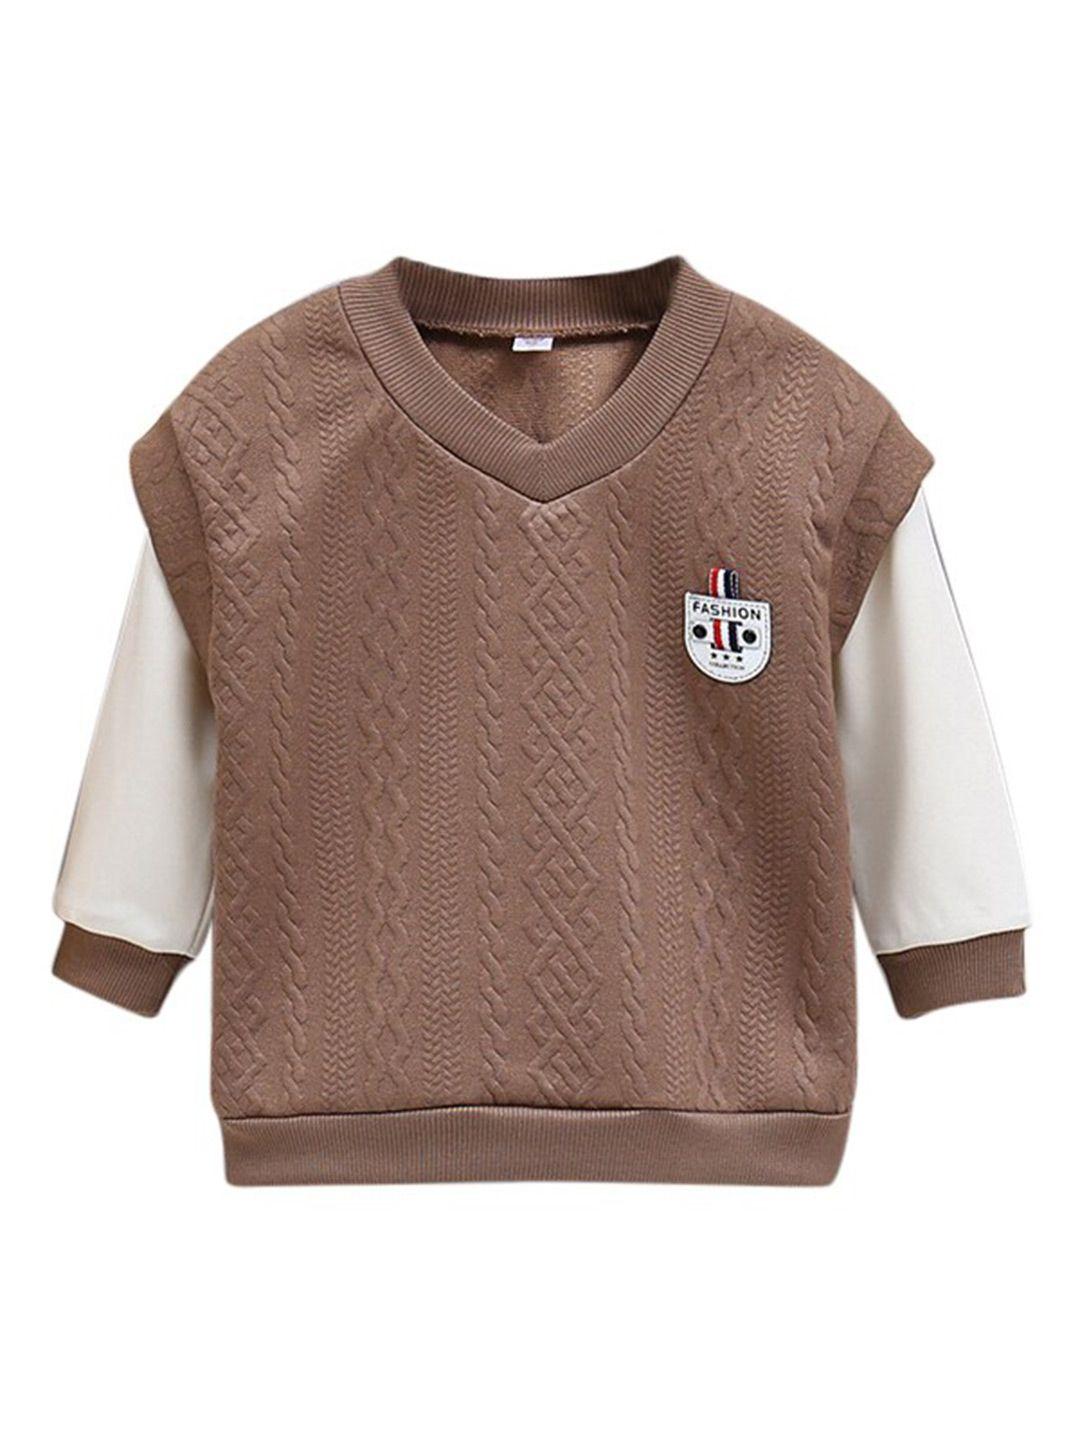 stylecast boys brown colourblocked sweatshirt